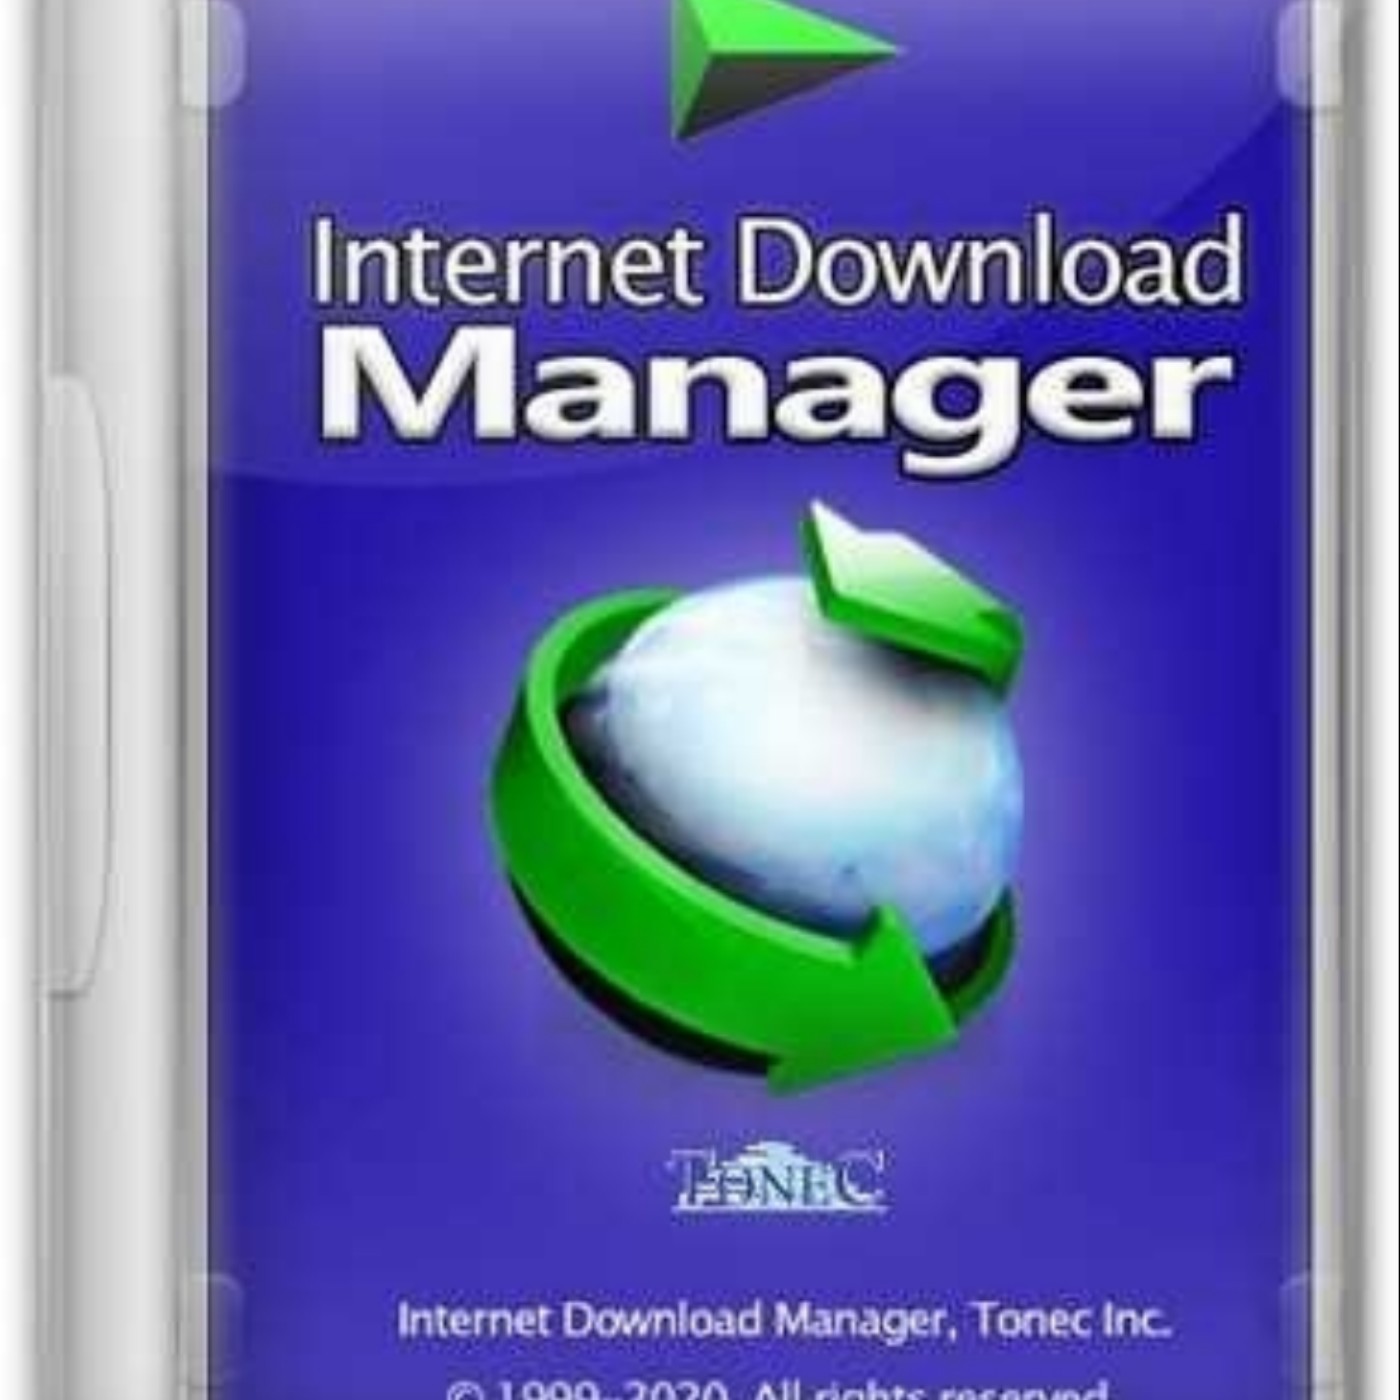 Internet download Manager. Internet download Manager (IDM). Загрузчик файлов. Internet download Manager REPACK.